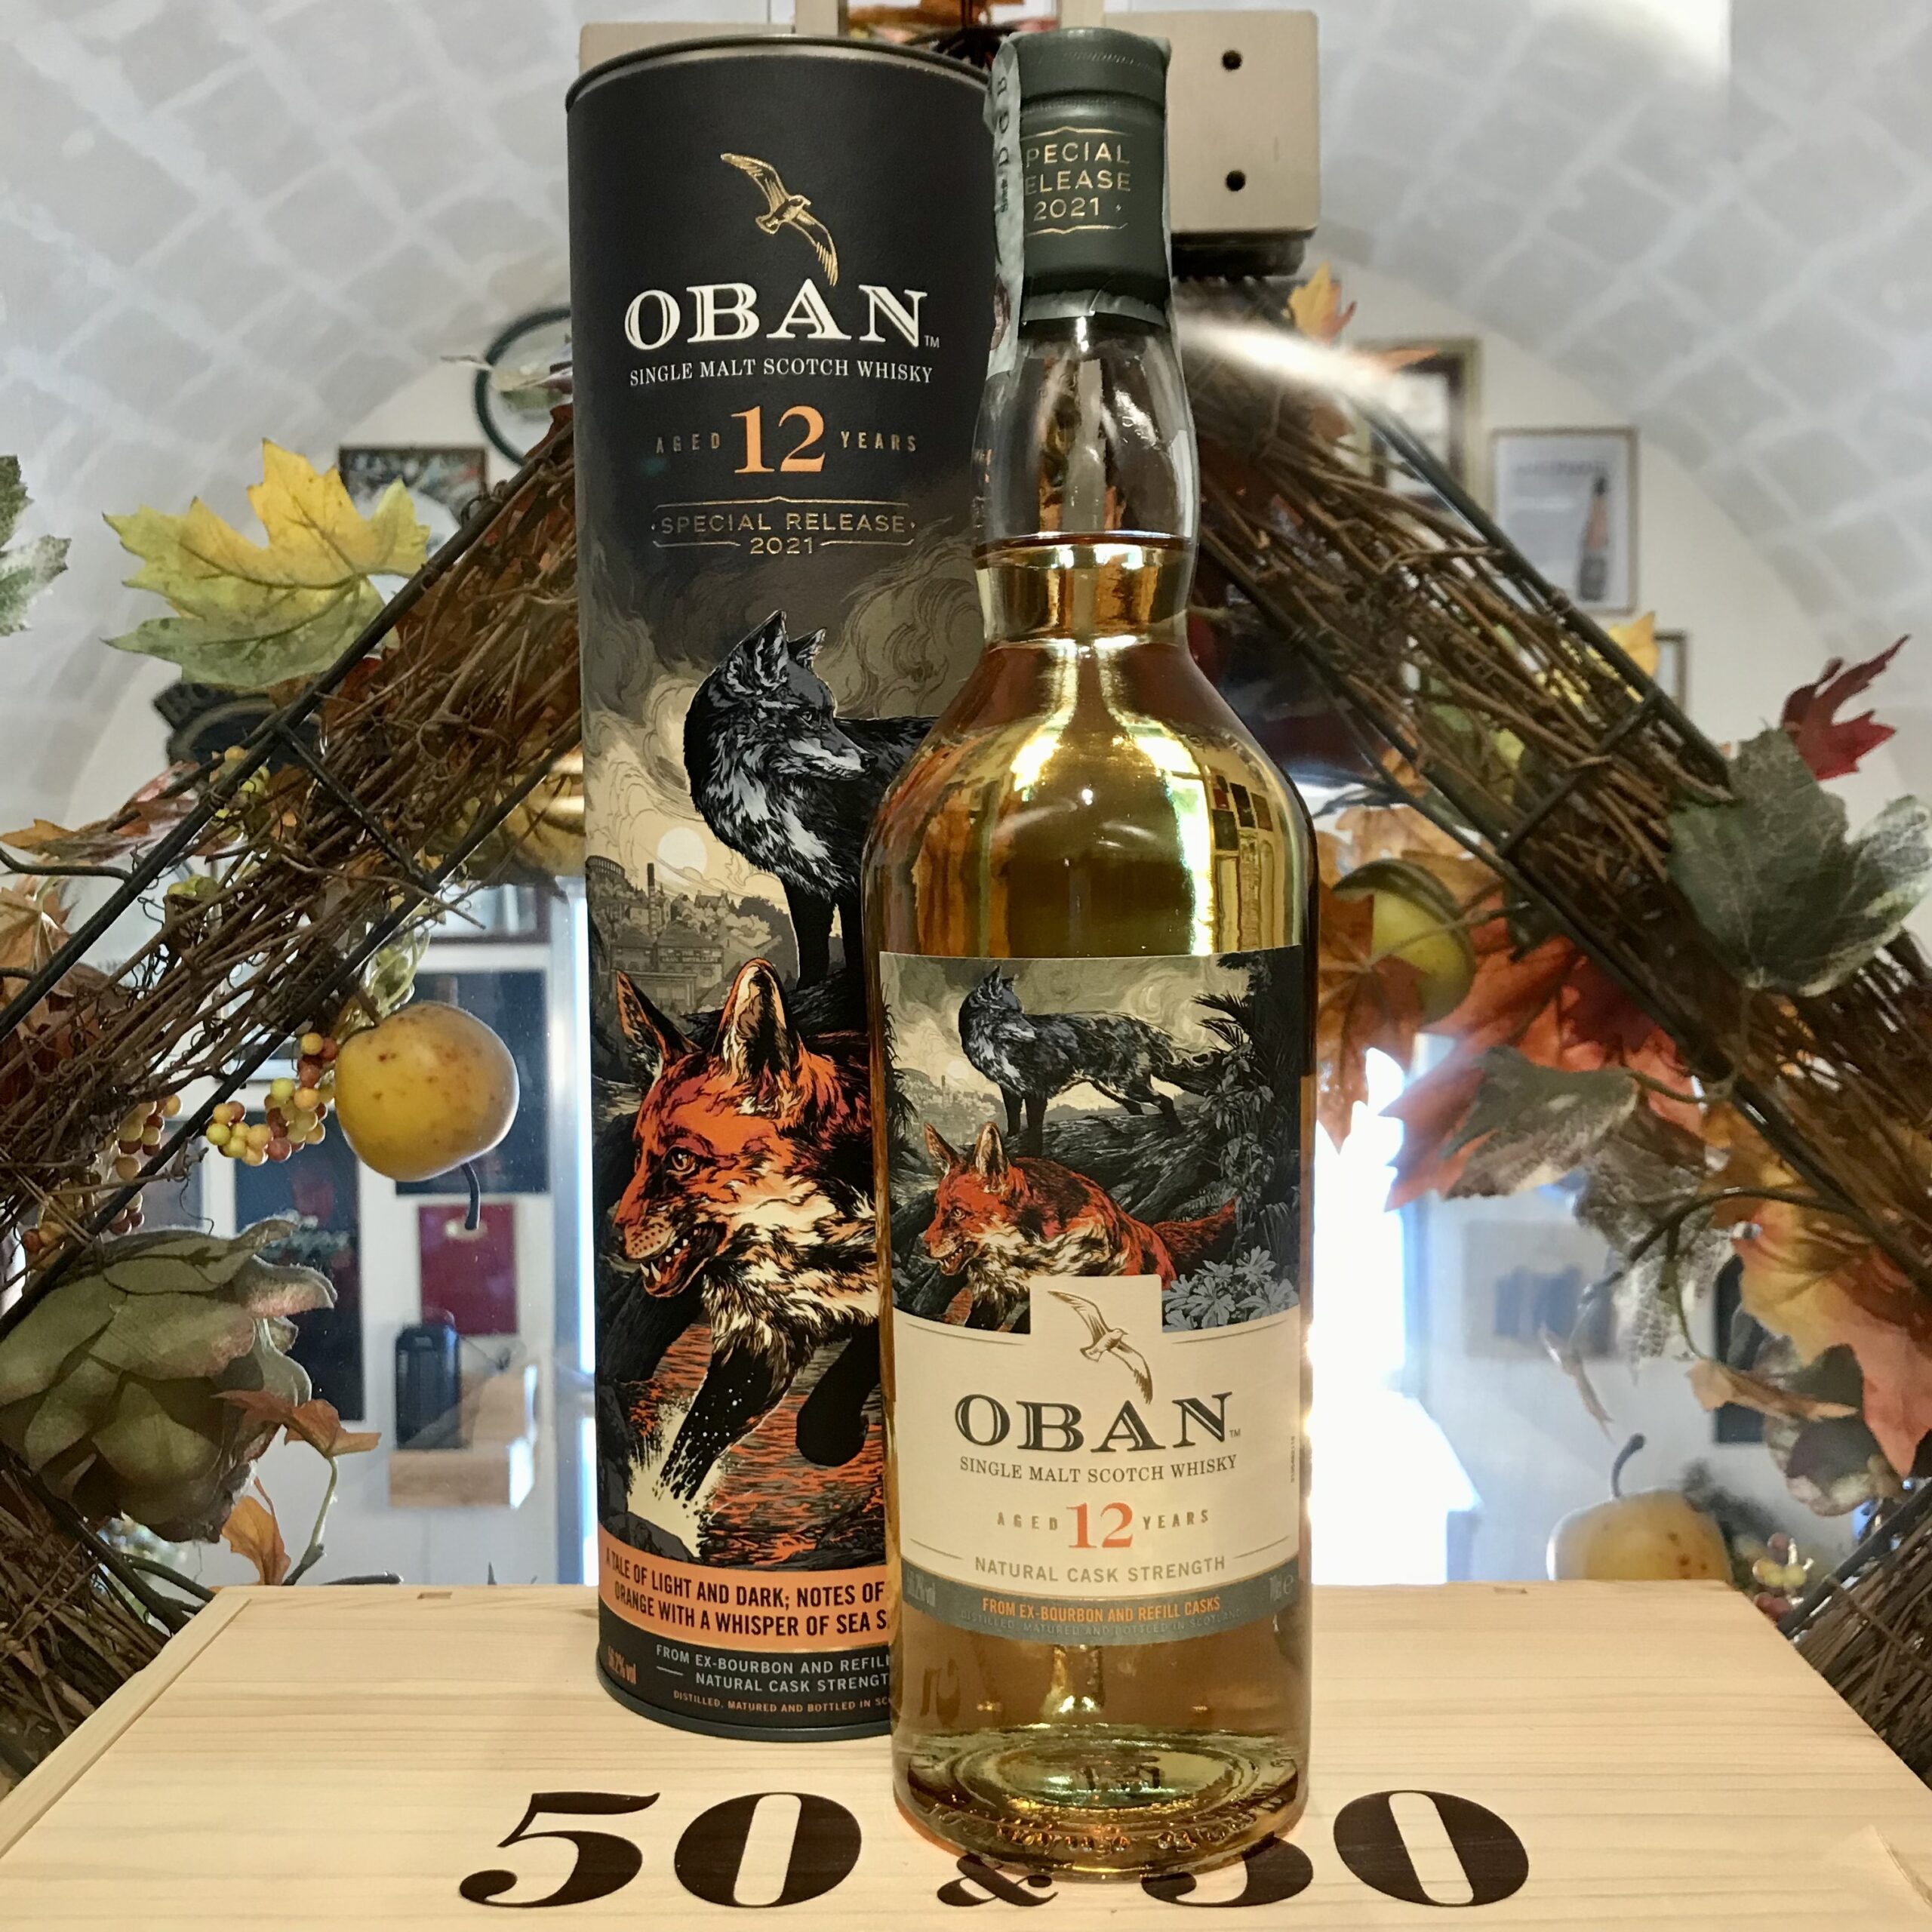 Oban Single Malt Scotch Whisky 12 YO Special Release 2021